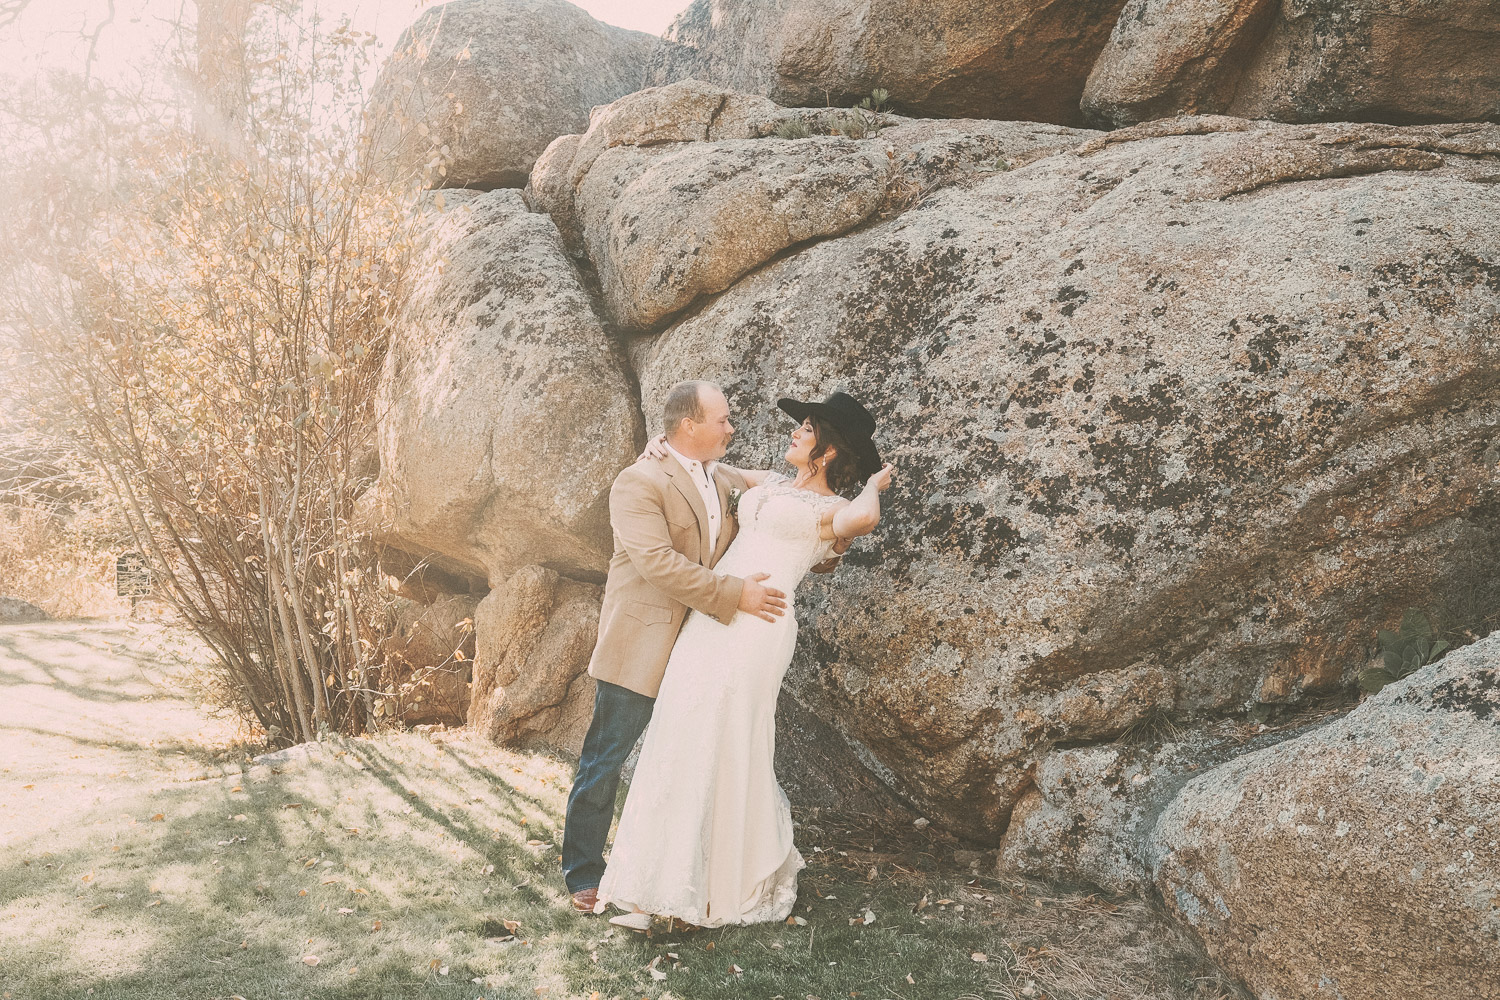 Twin Falls Idaho Wedding Elopement Photography